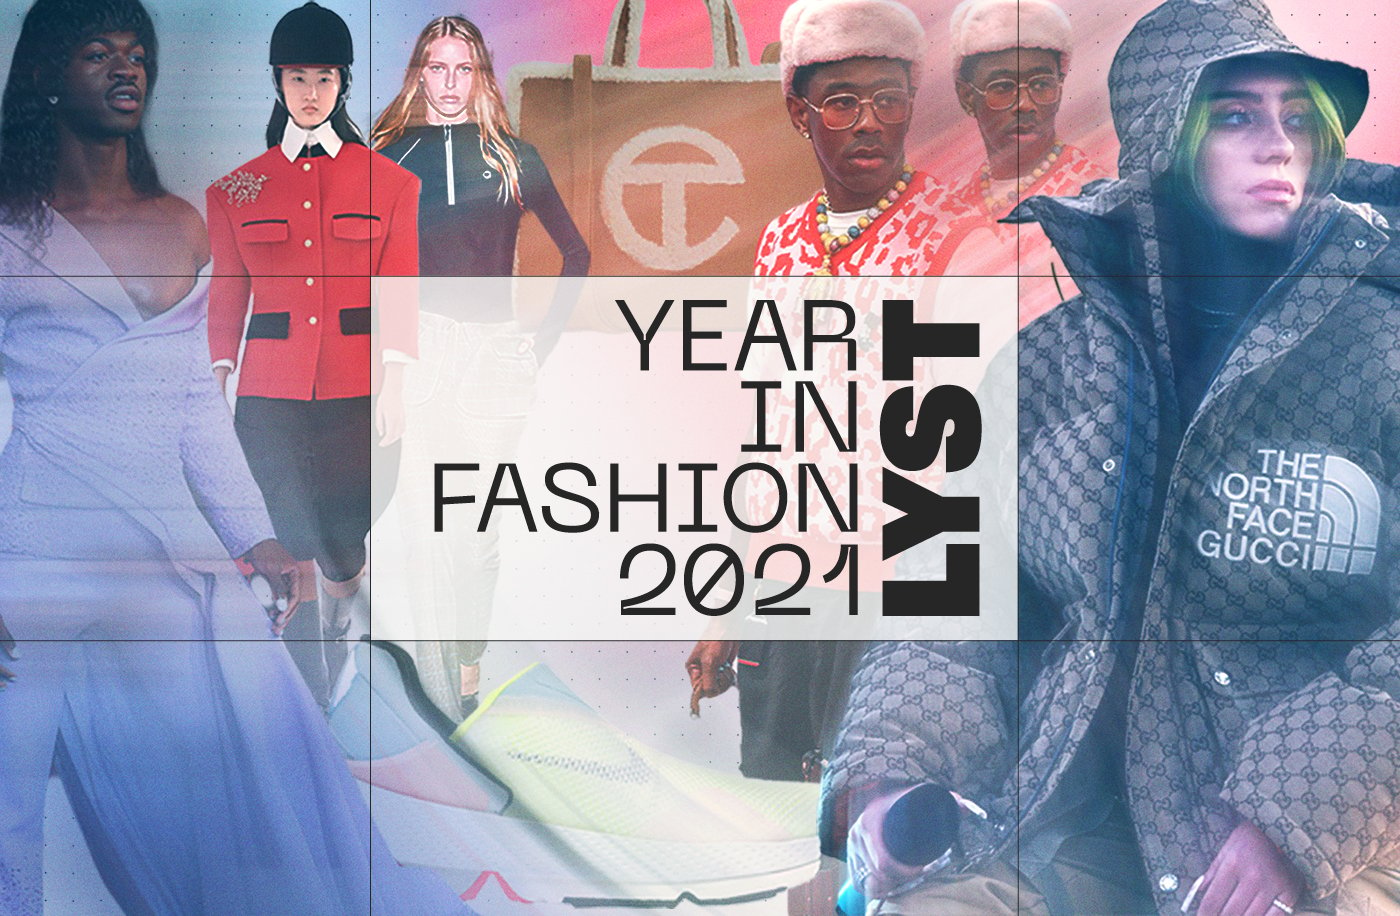 2021 Lyst Year in Fashion Calls YEEZY x Gap Most Hyped Collab